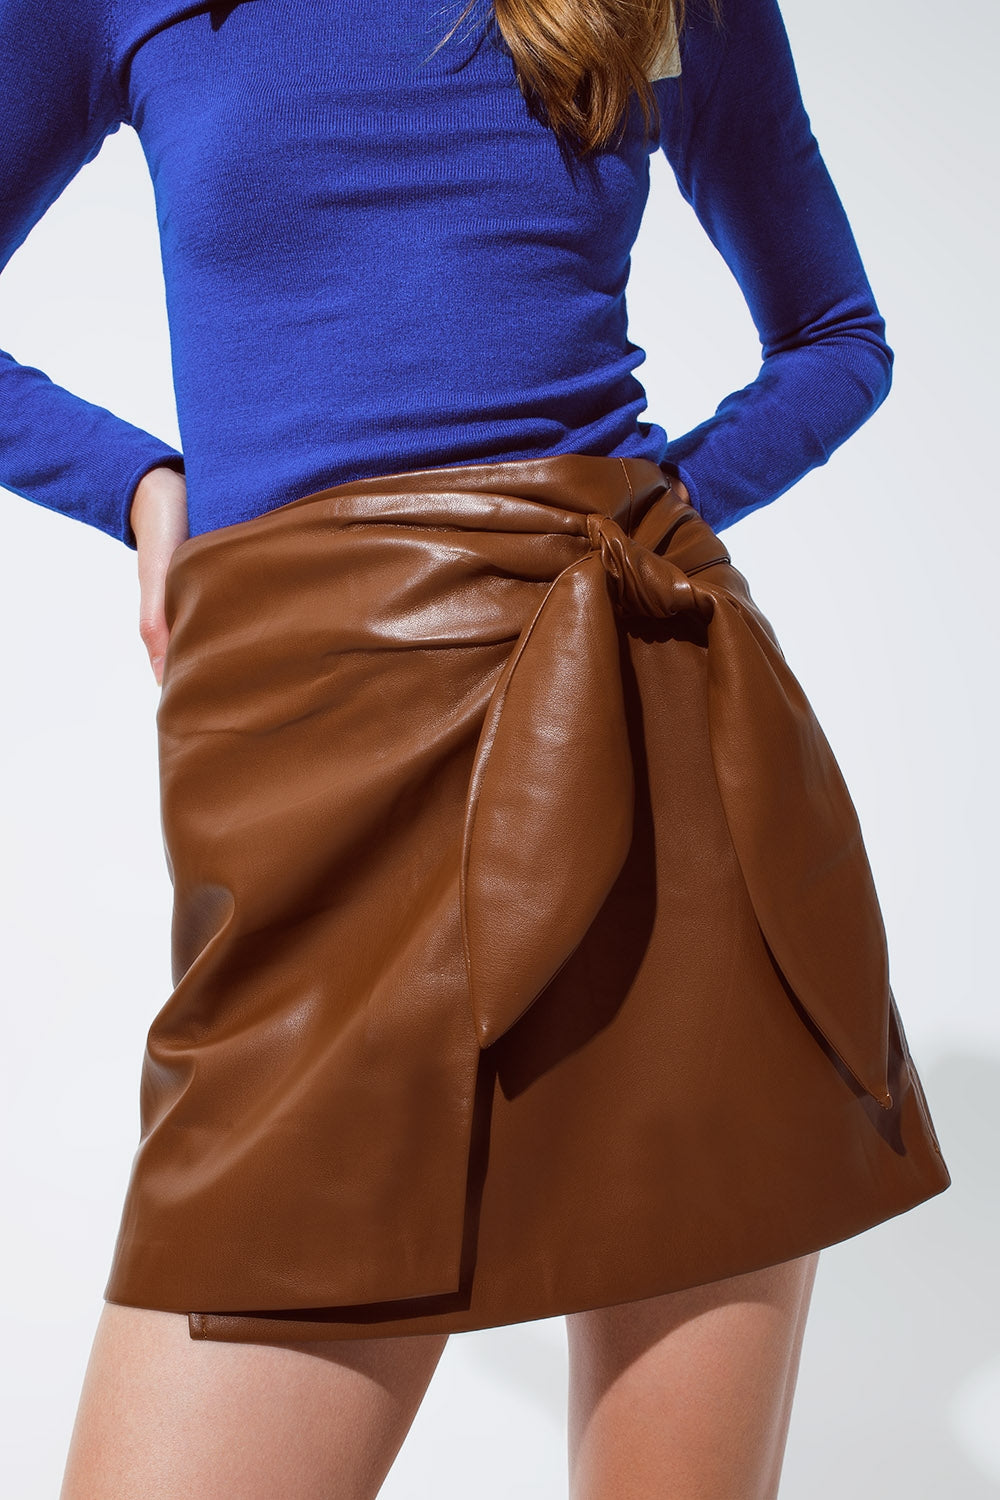 TEEK - Side Bow Brown Mini Skirt SKIRT TEEK M   